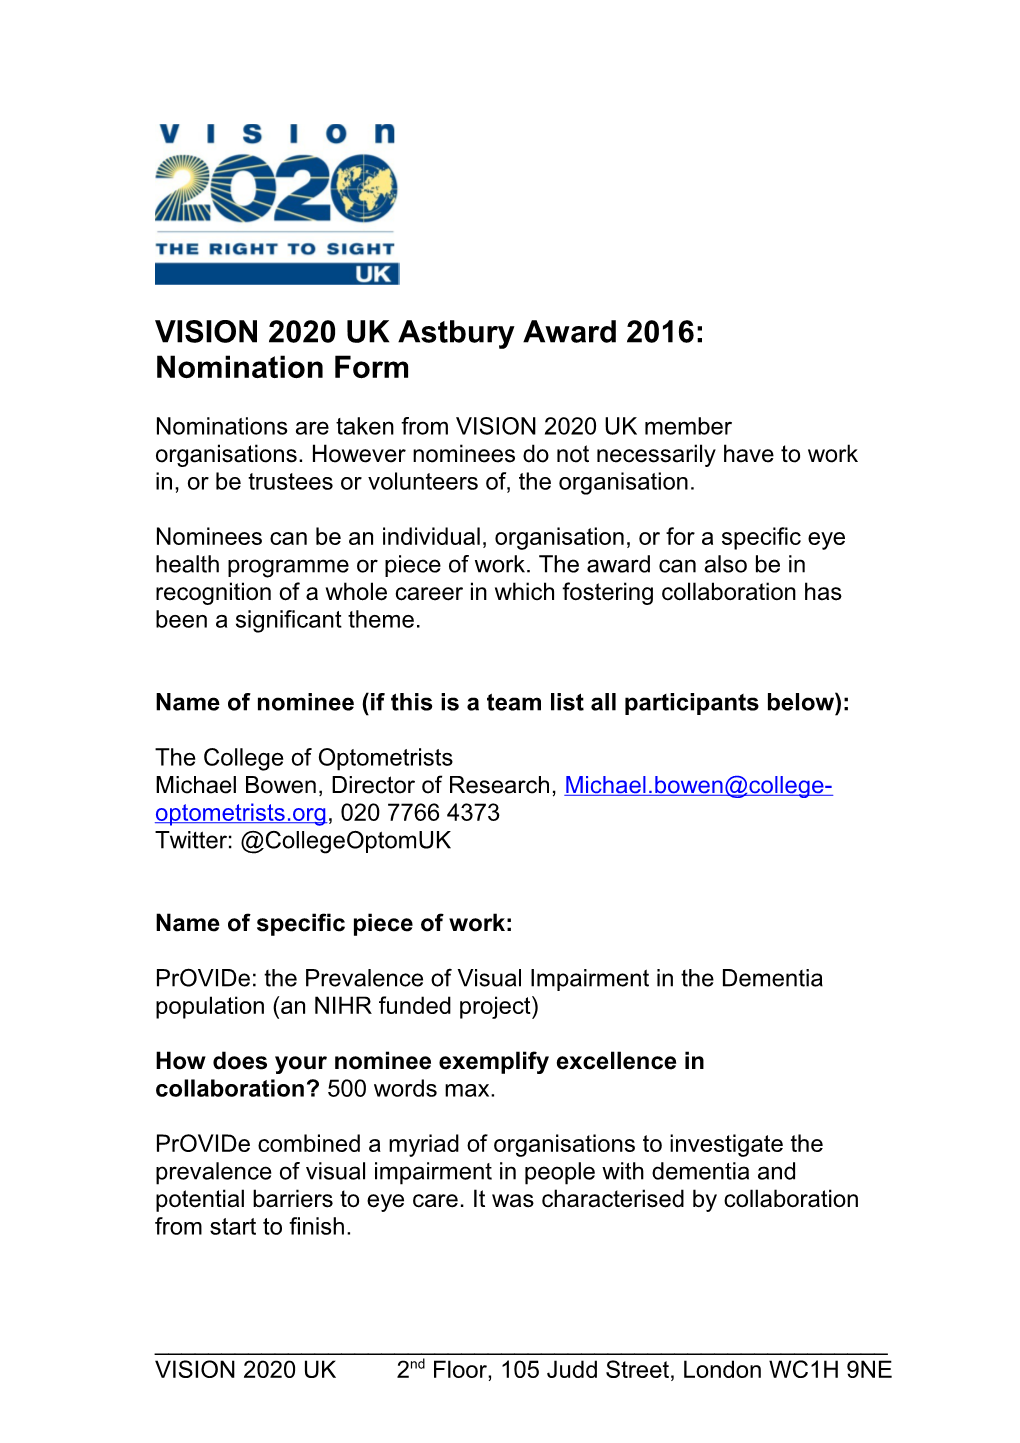 VISION 2020 UK Astbury Award 2016: Nomination Form